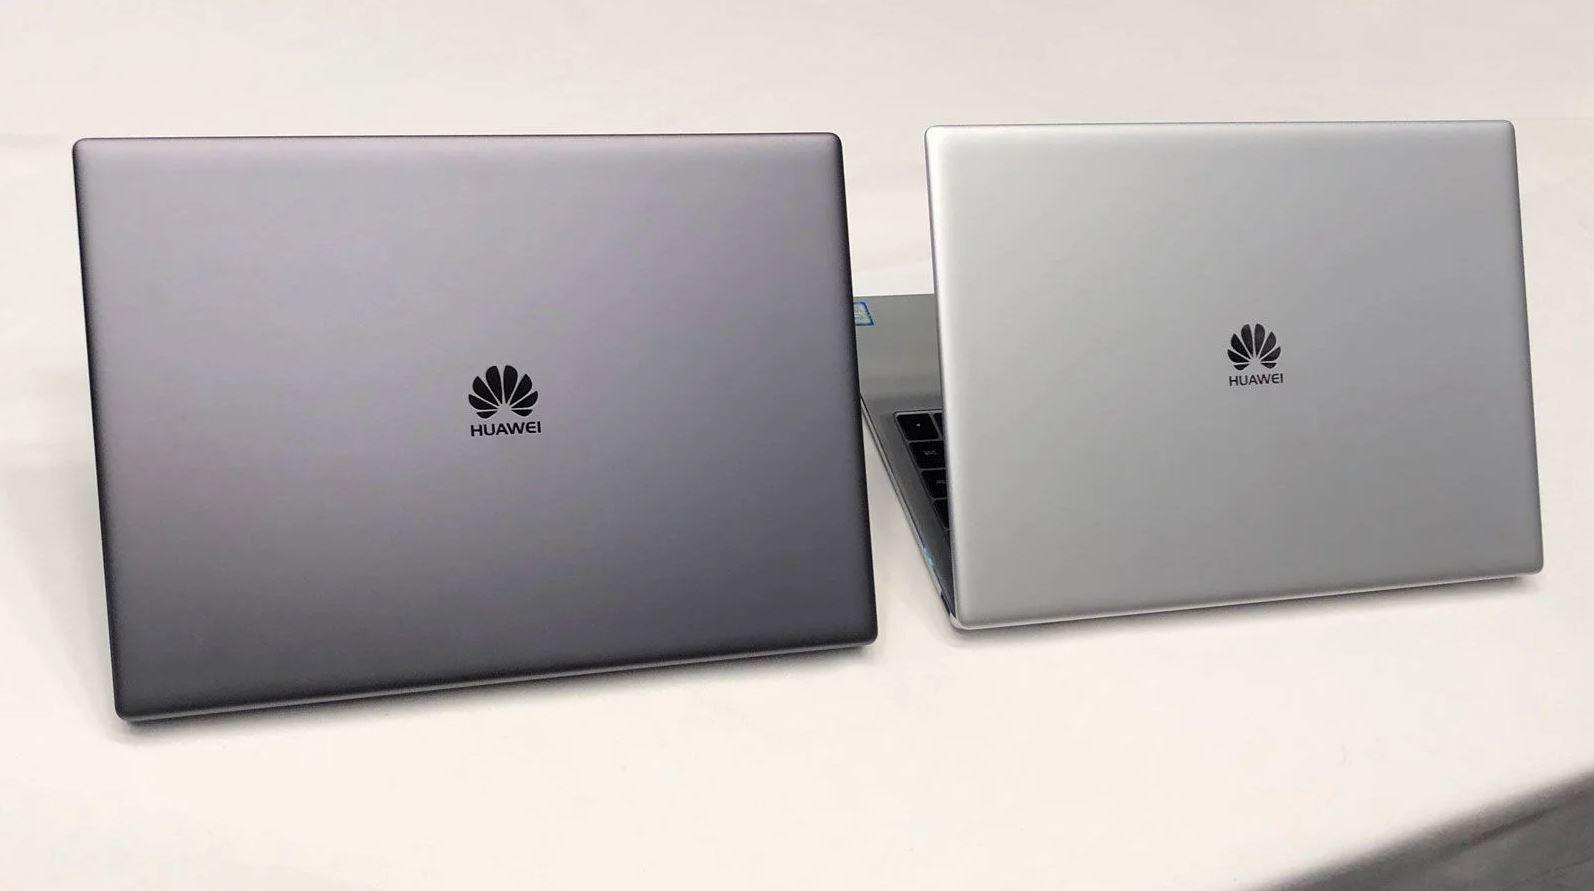 نقد و بررسی لپ تاپ میت بوک ایکس پرو هوآوی - Huawei MateBook X Pro